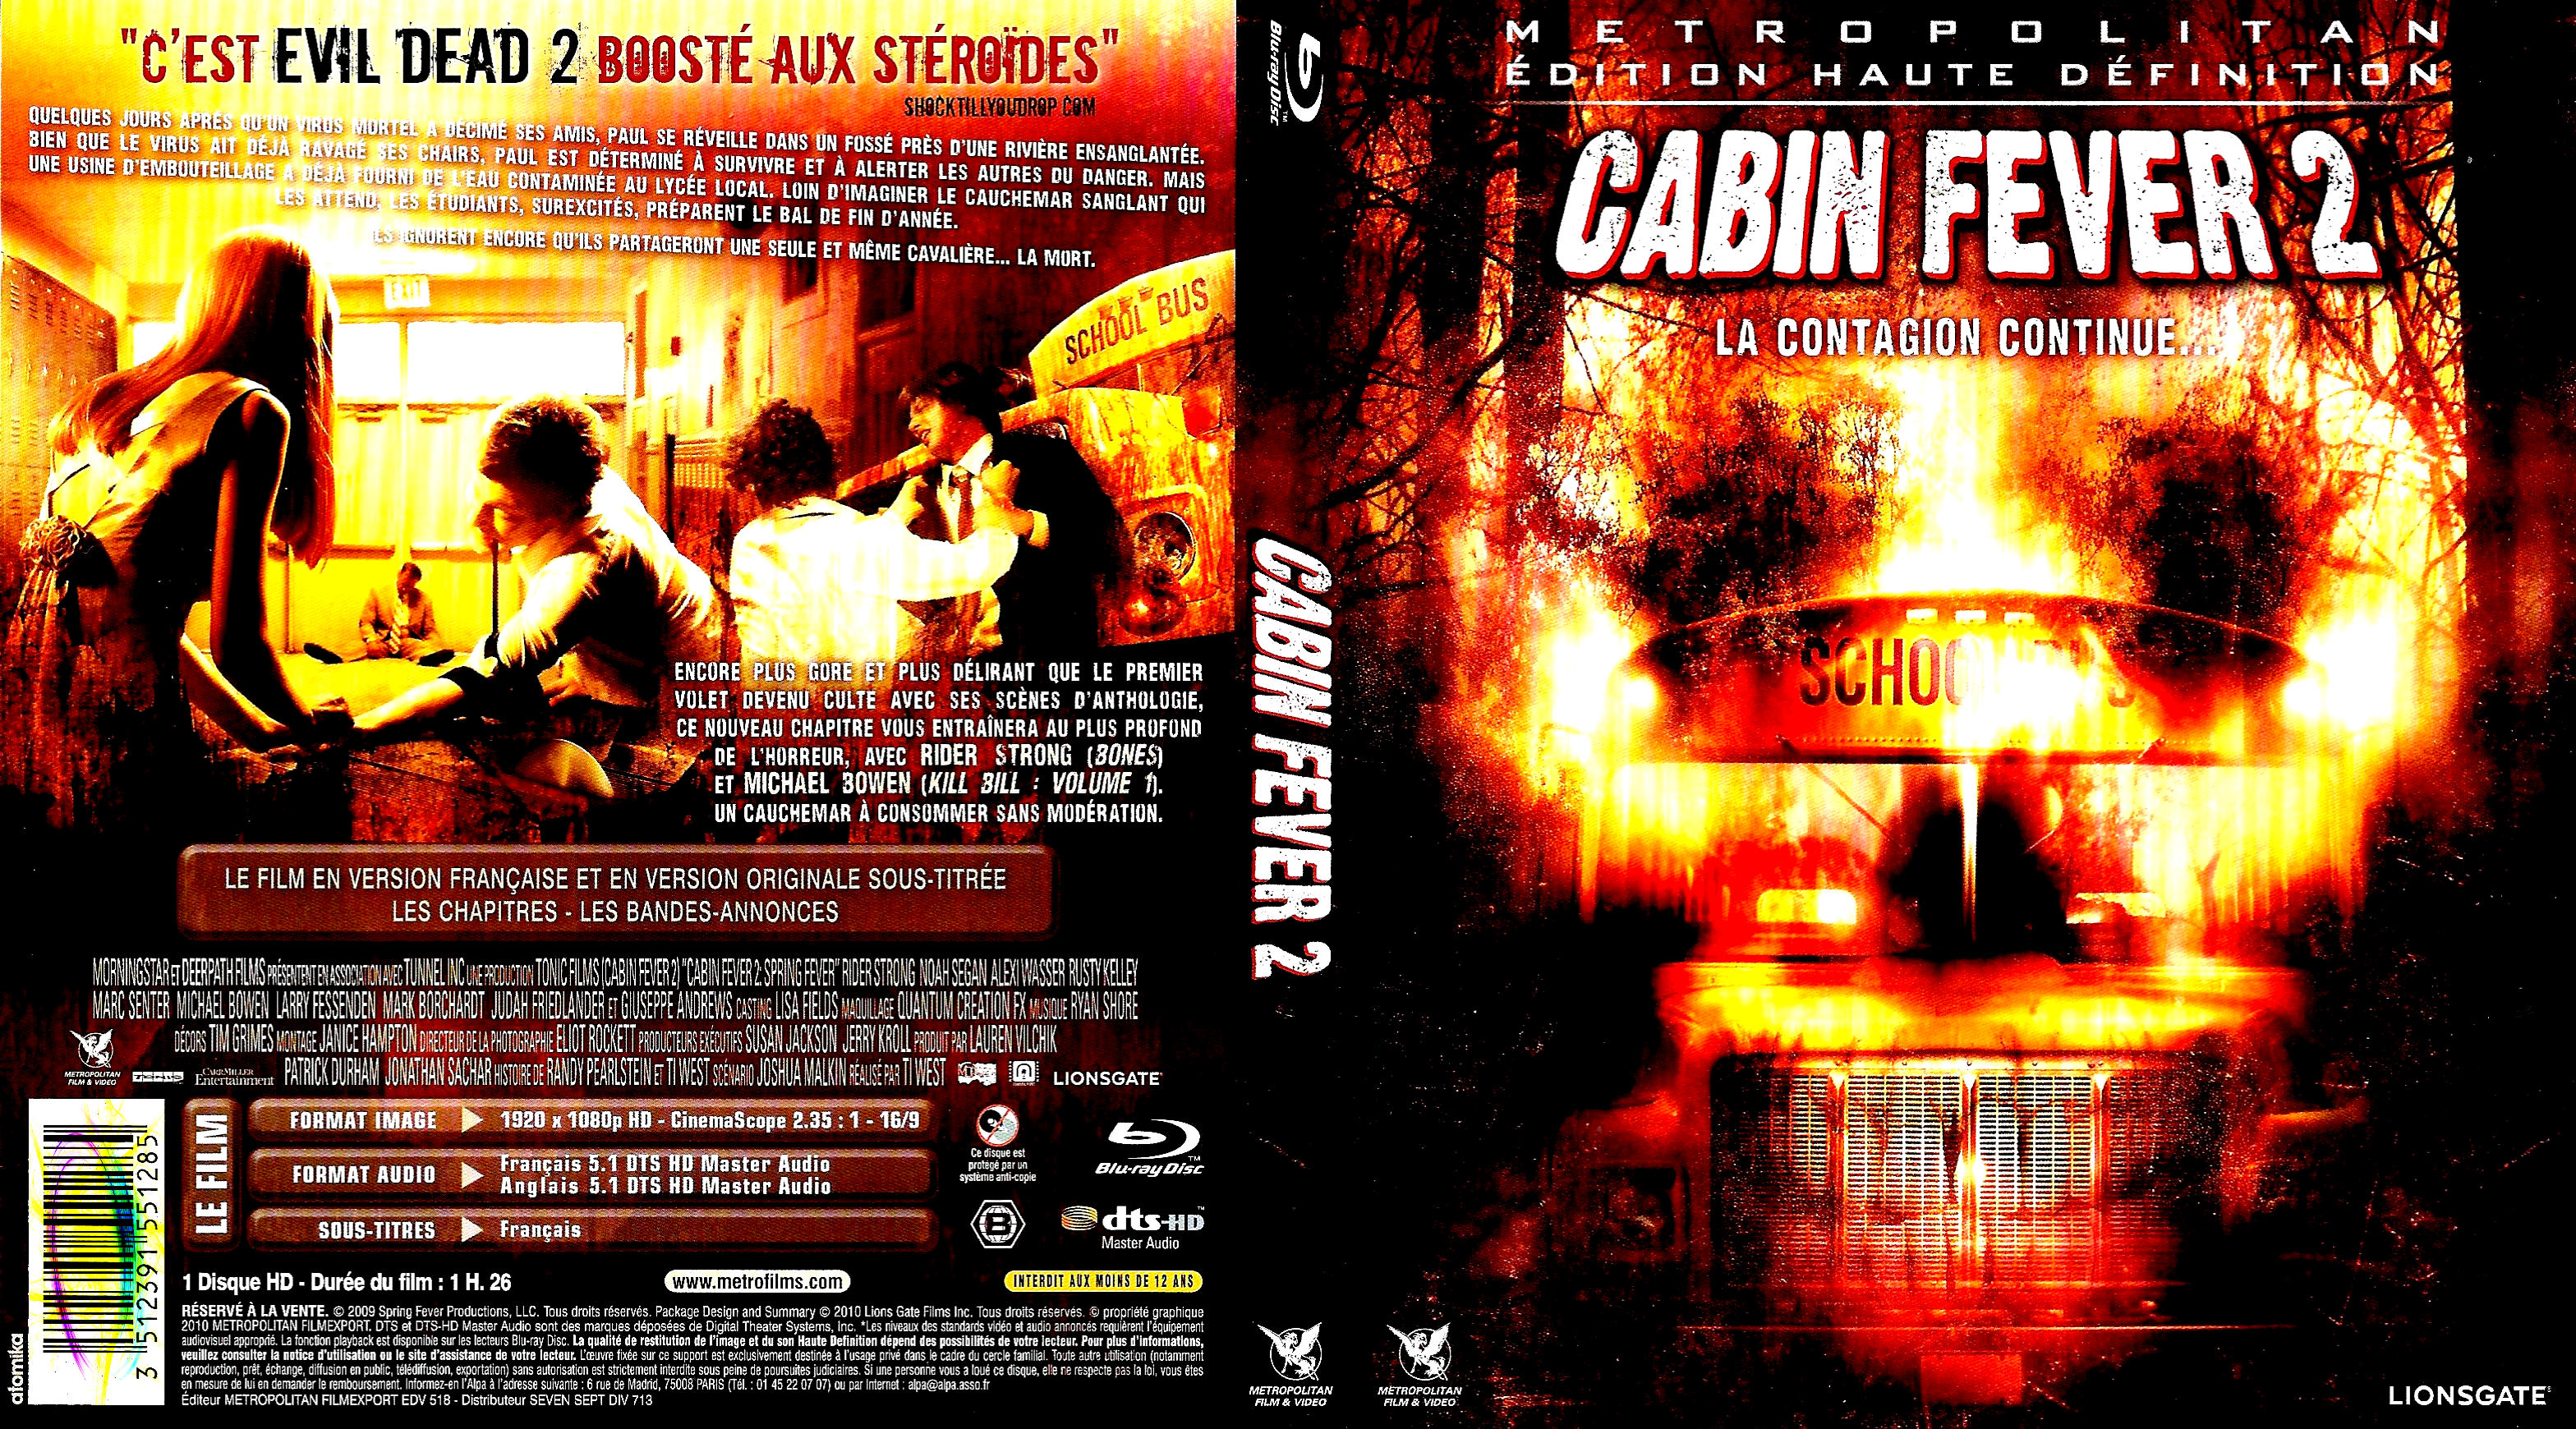 Jaquette Dvd De Cabin Fever 2 Blu Ray Cinéma Passion